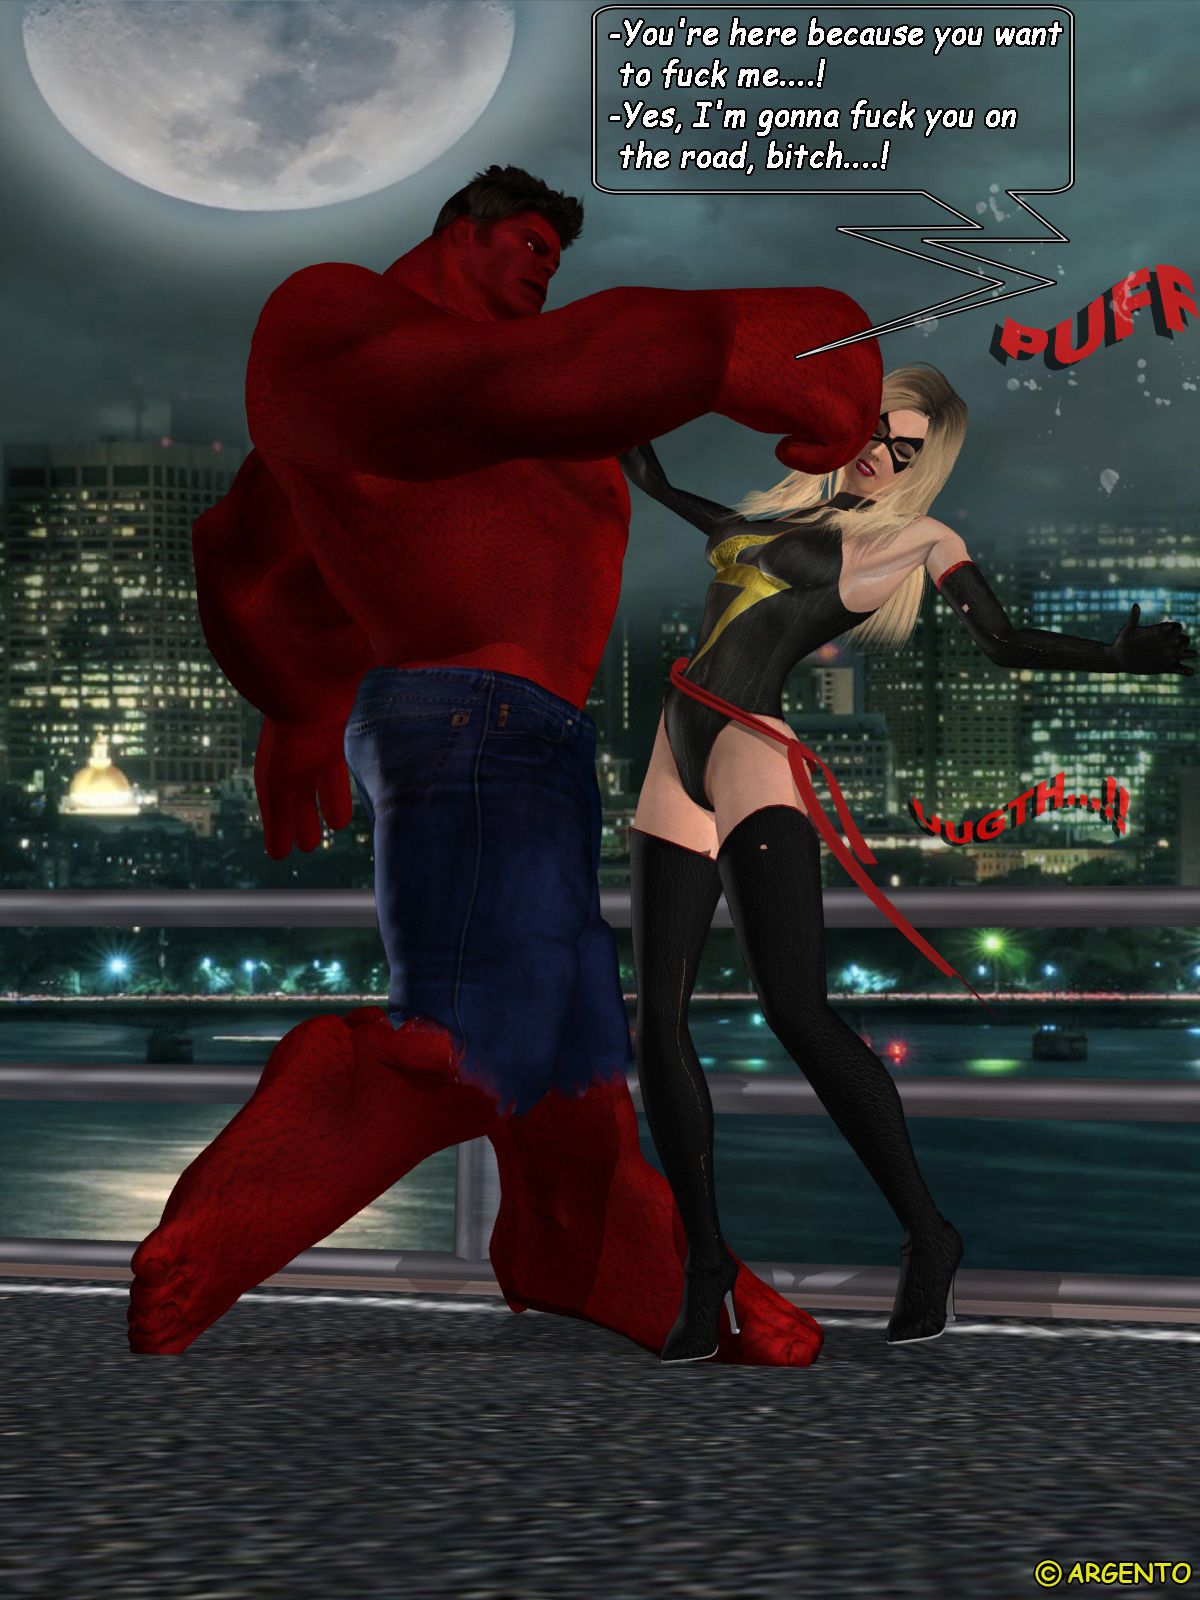 Ms. Marvel vs Red Hulk "The Return of Red Hulk" 10